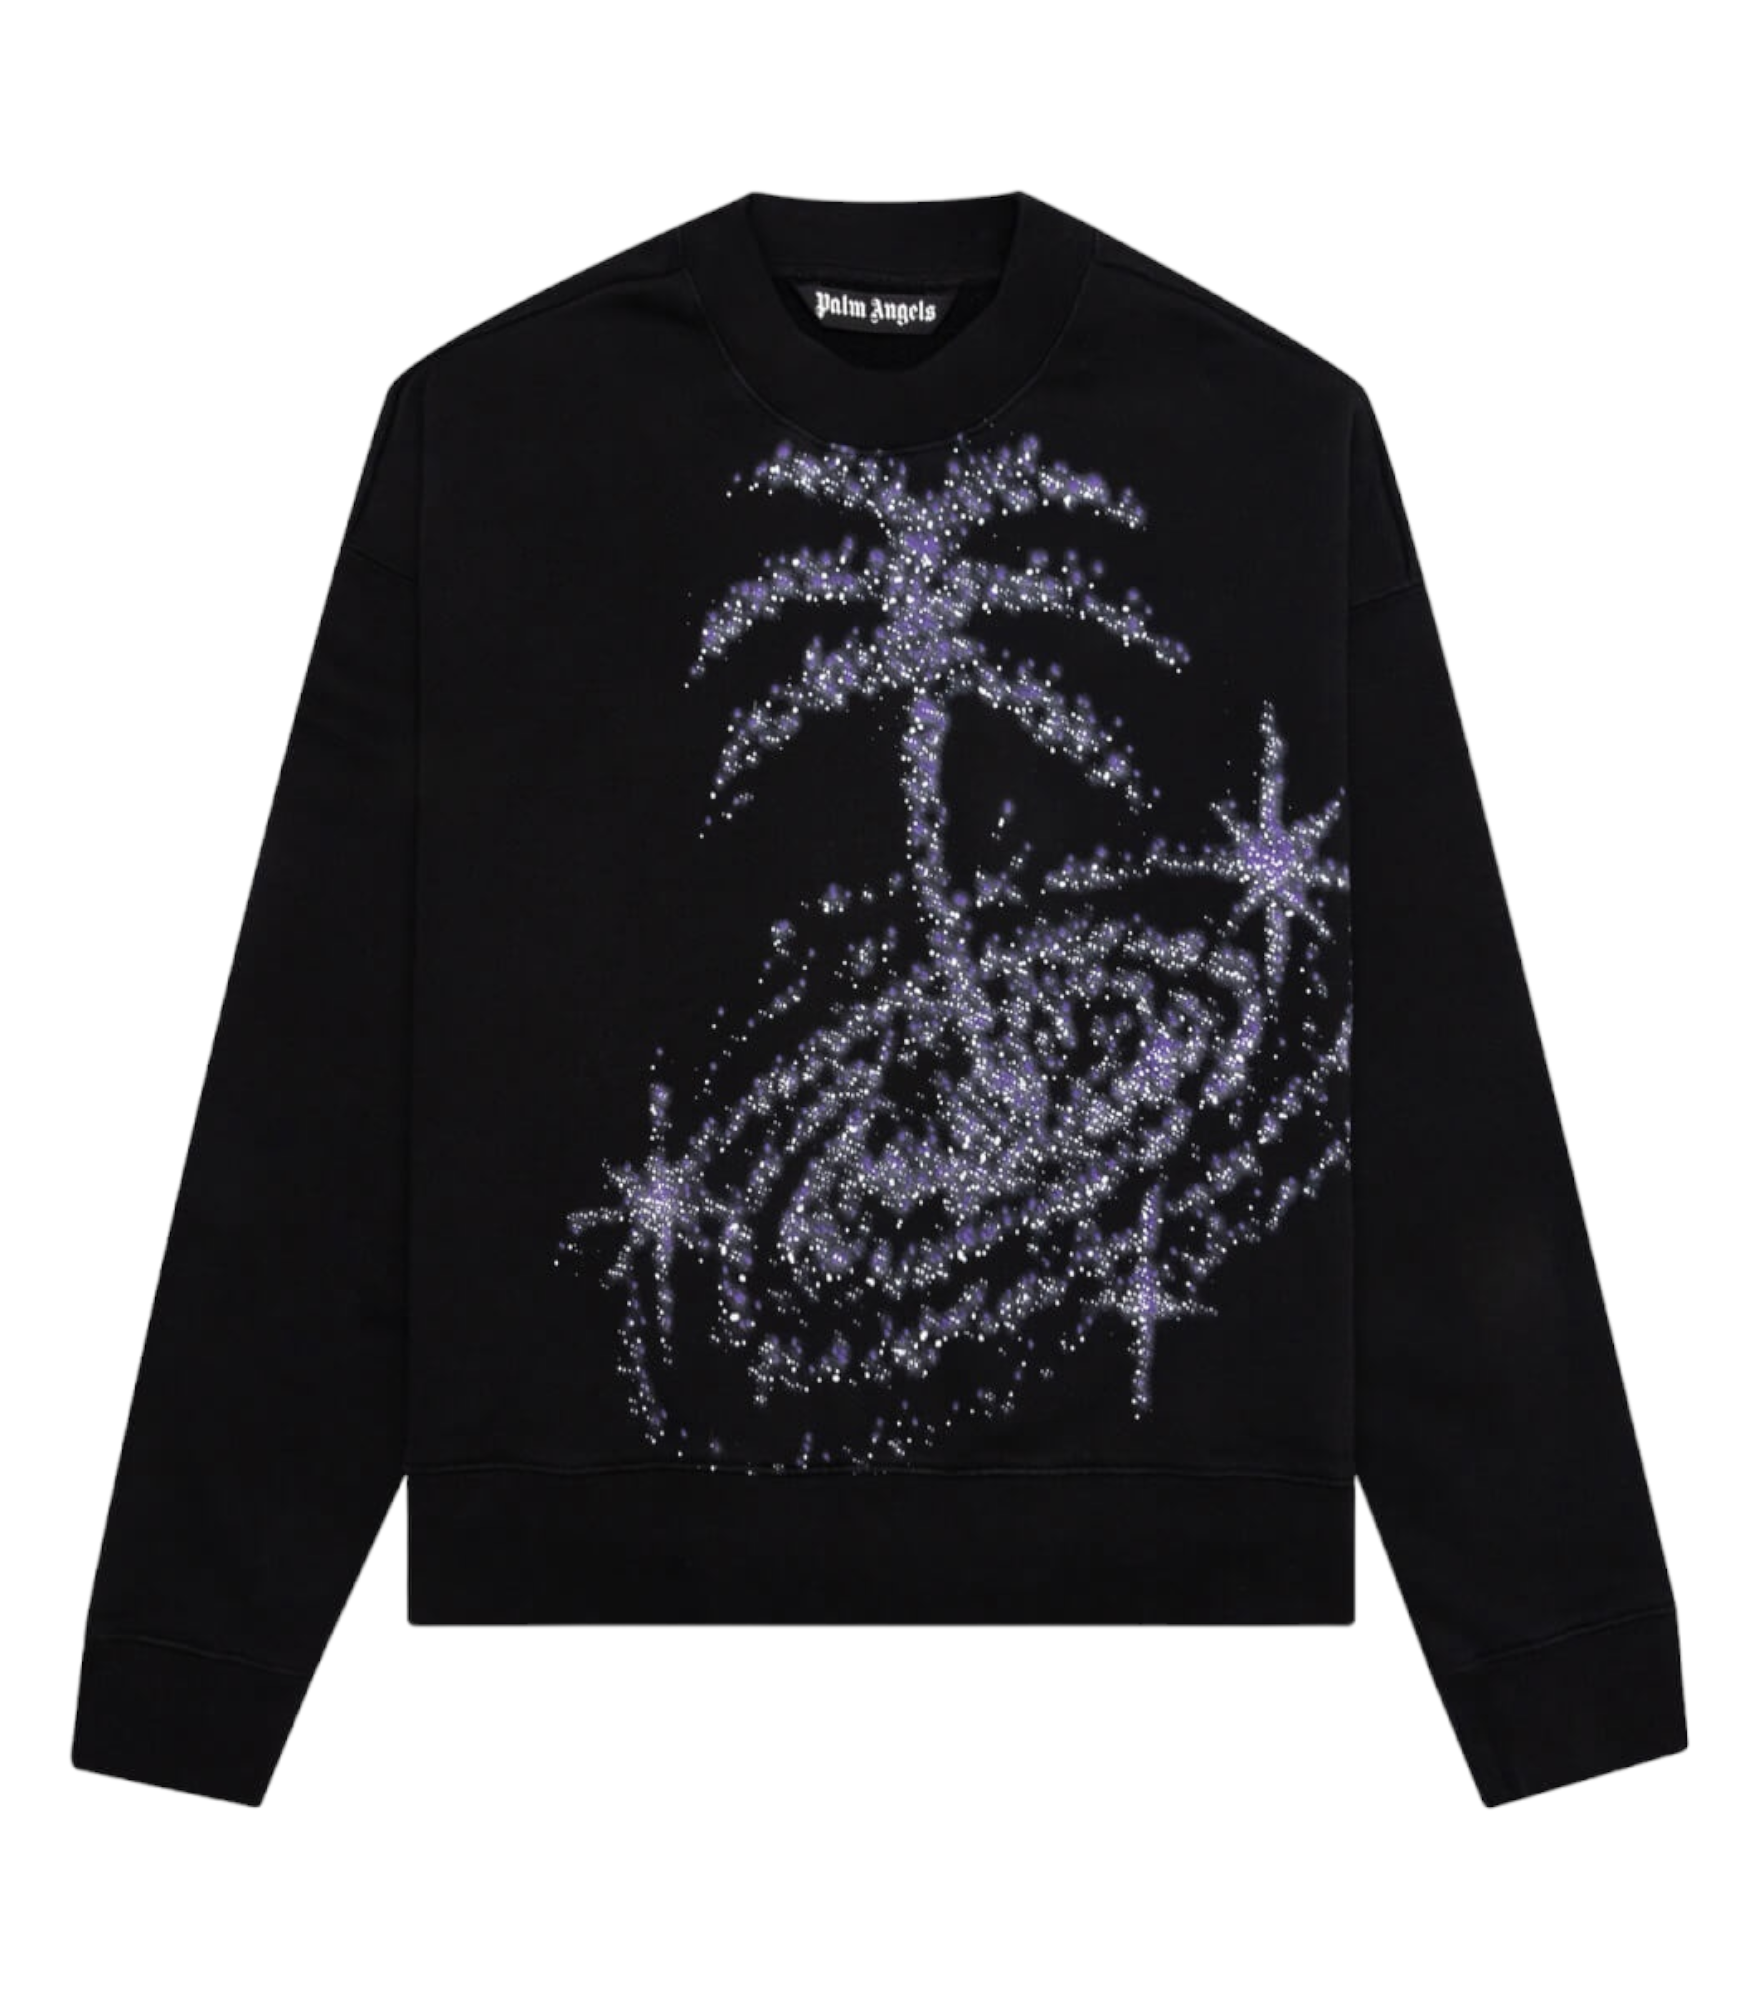 Palm Angels Galaxy Print Sweatshirt